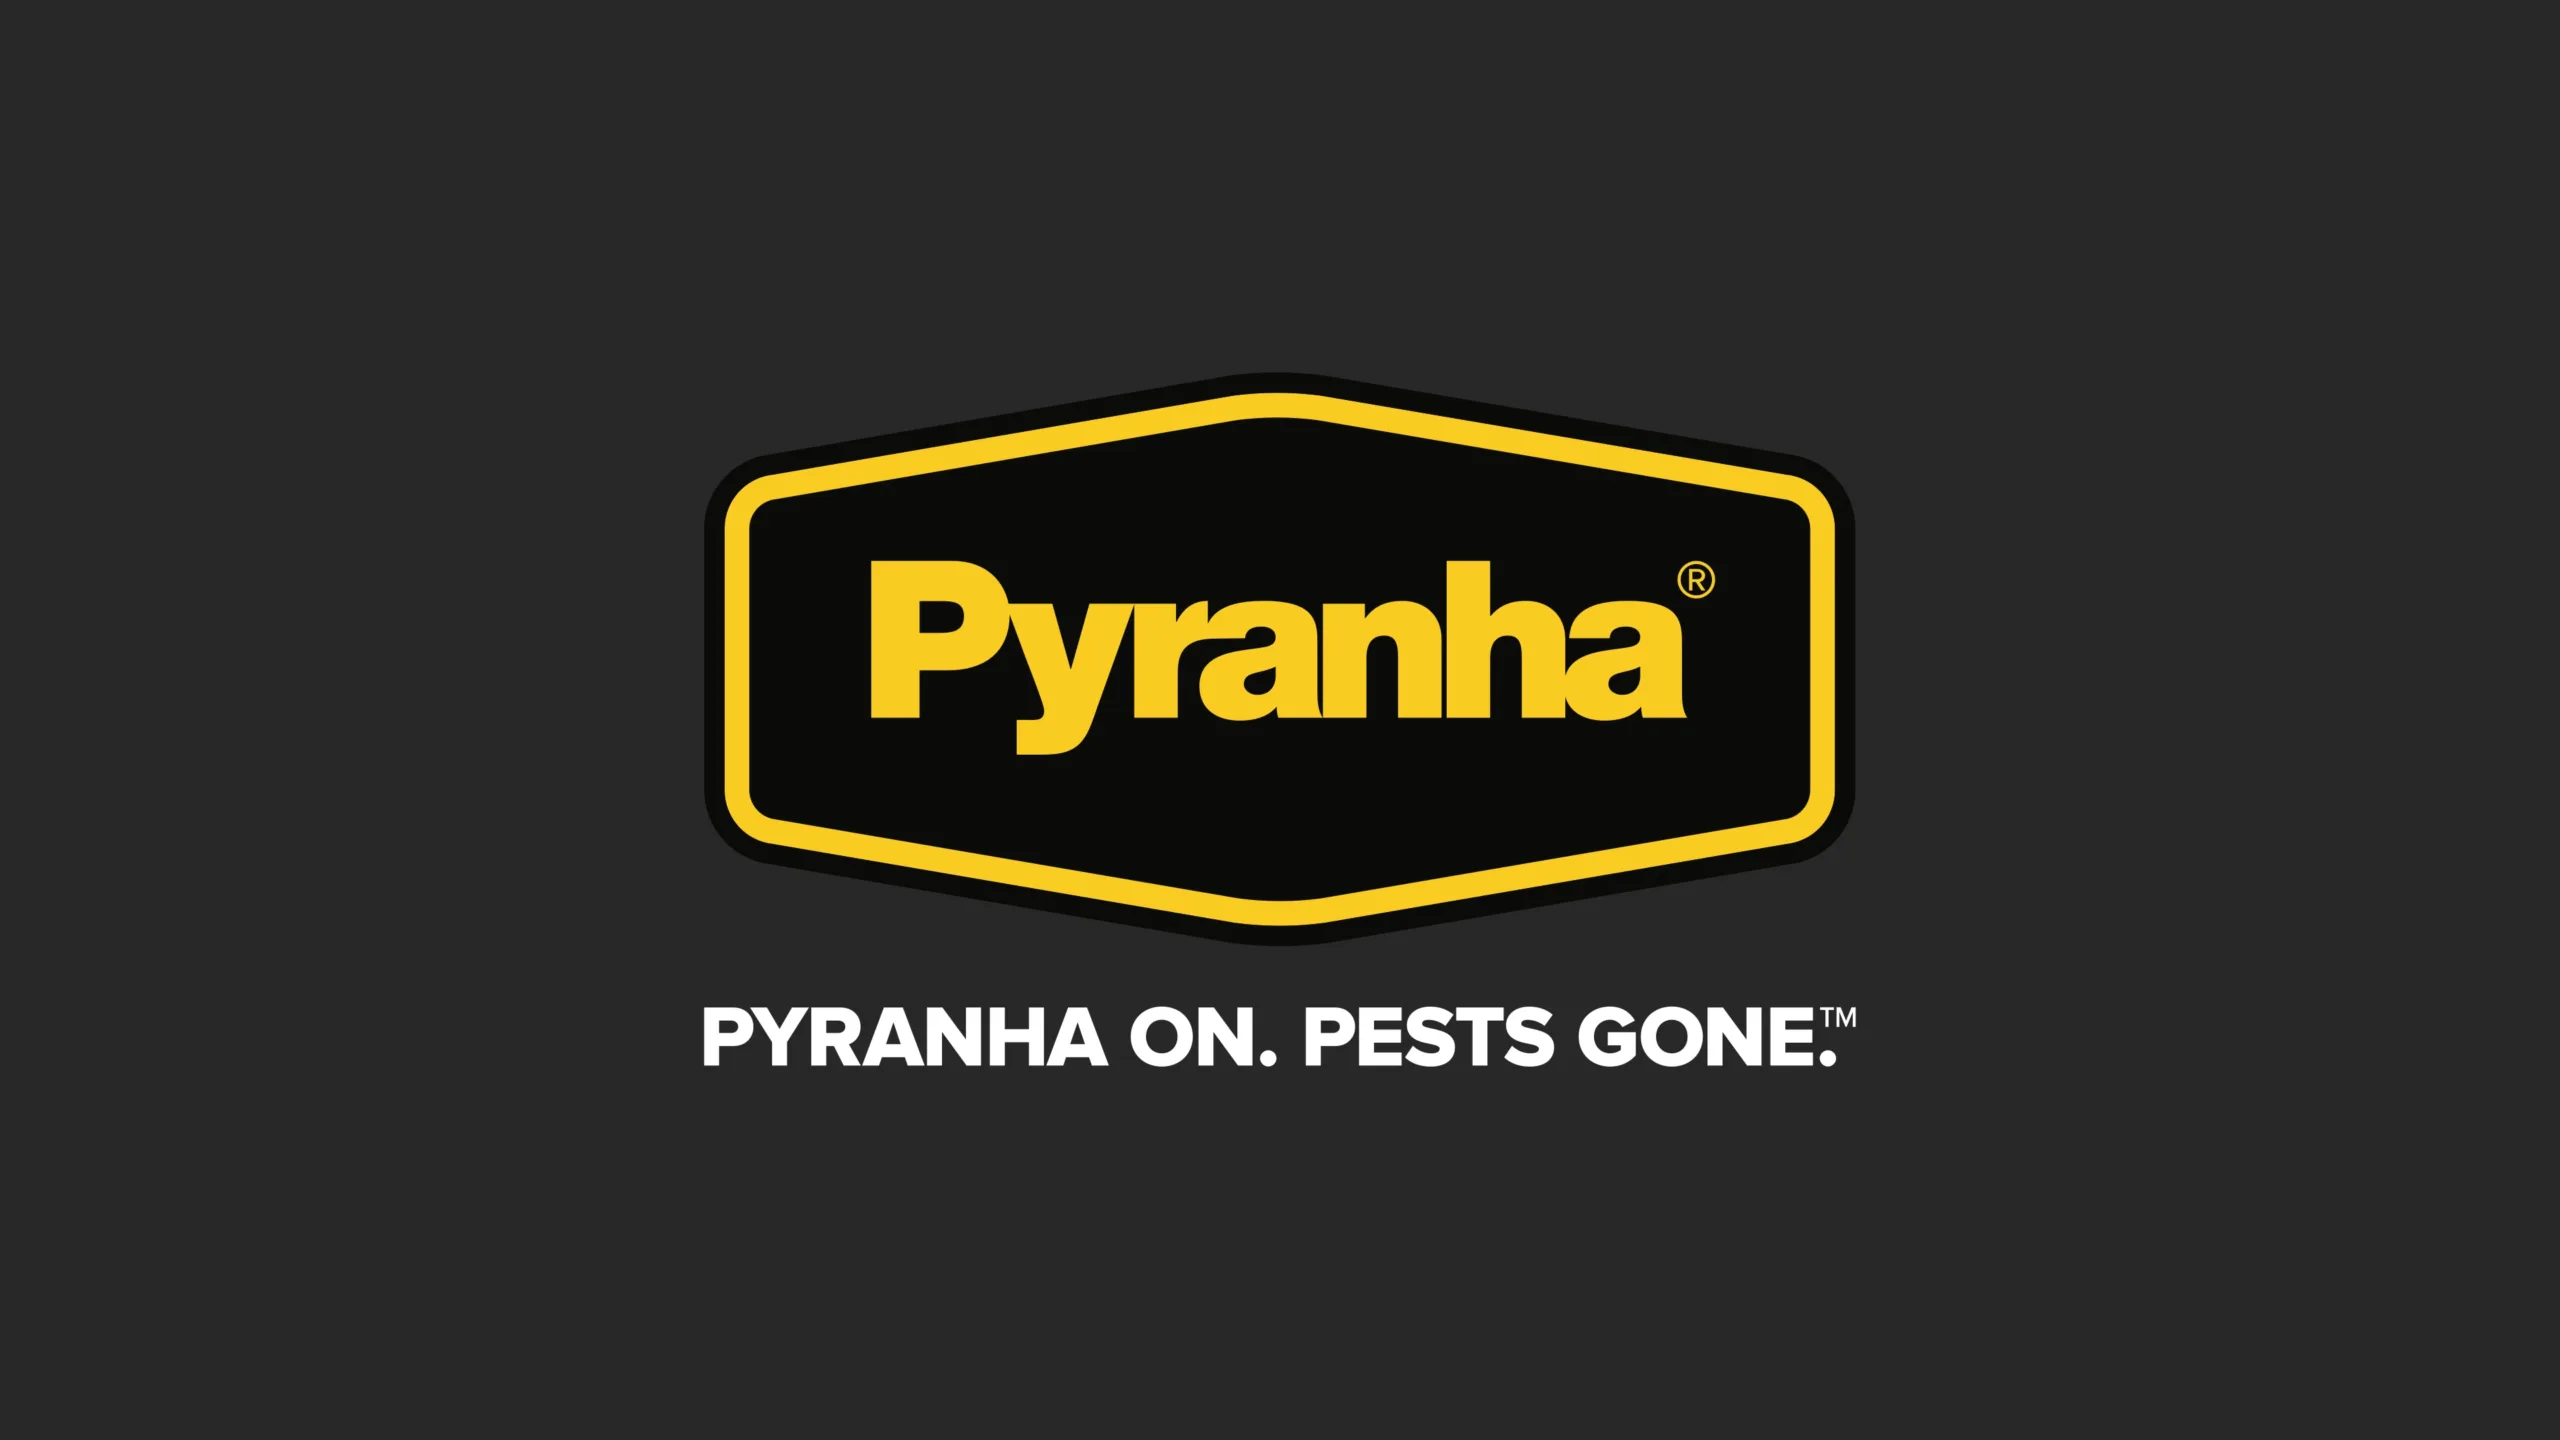 Pyranha branding - logo design, marketing and advertising